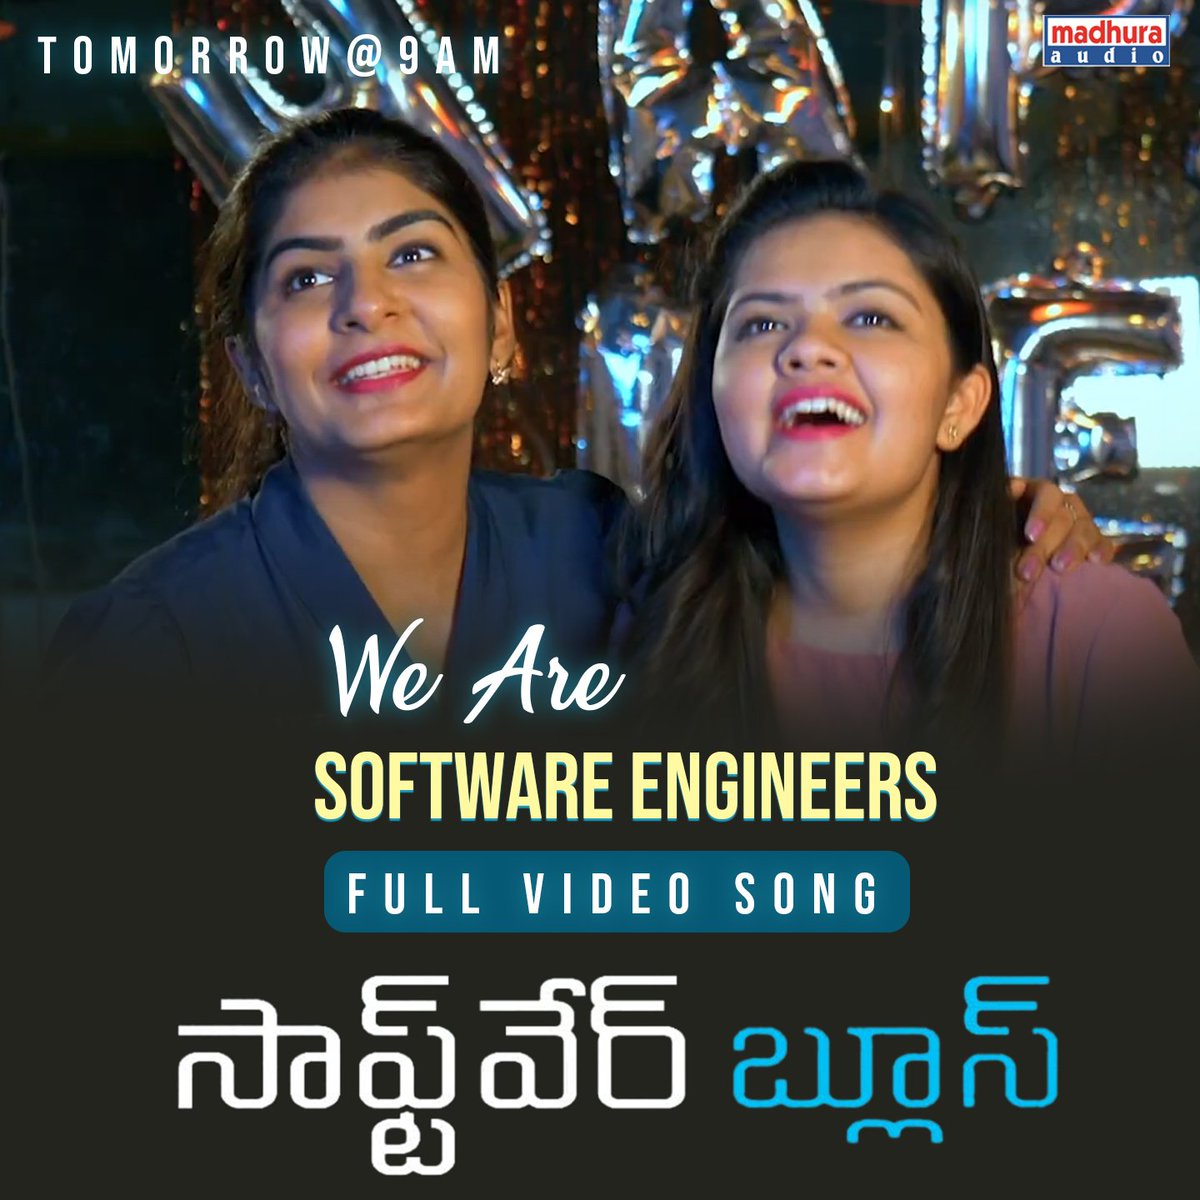 We Are Software Engineers full video song from #SoftwareBlues will be releasing tomorrow at 9 AM stay tuned to @MadhuraAudio

#UmaShankar #SaiDevaHarsha #SubhashAnand #VamshiKrishna #ShreeramNimmala #BhawanaChoudry #Basha